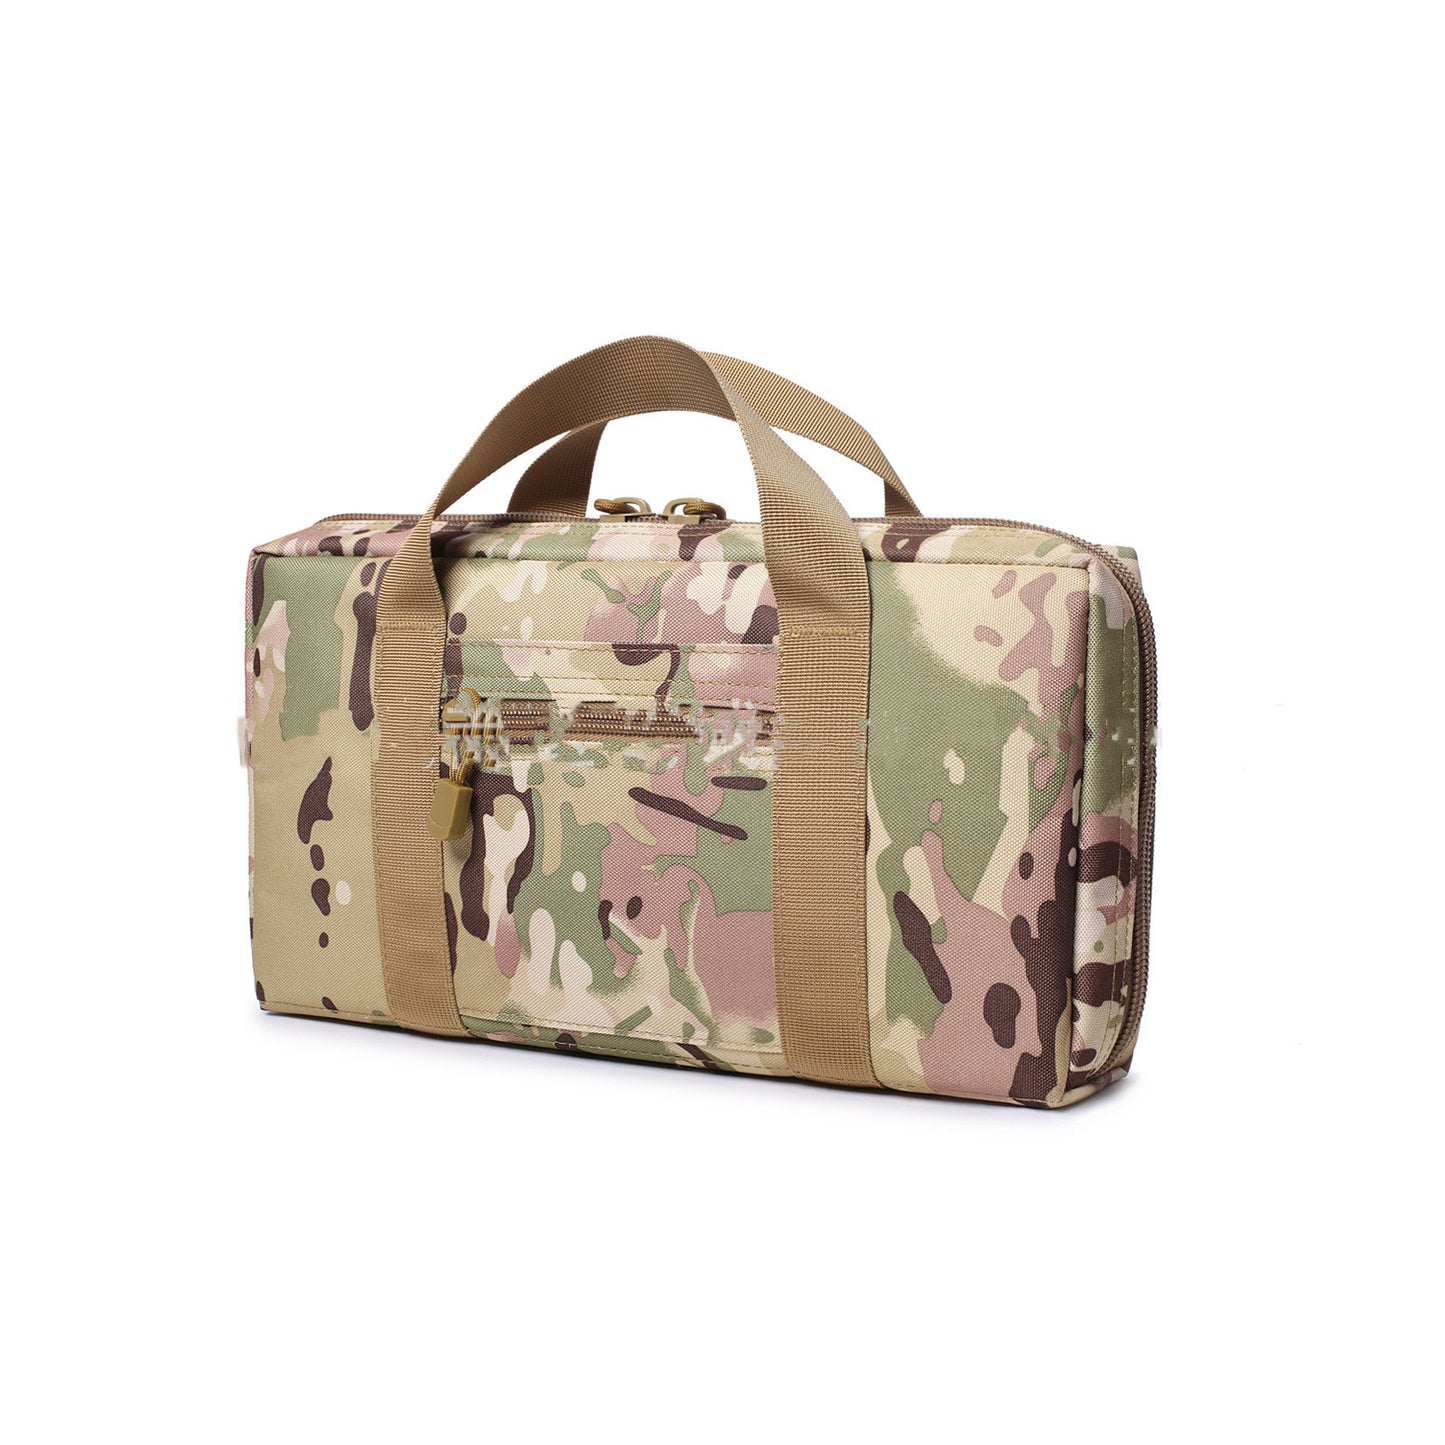 Tactical Gun Bag Storage Bag Tactical Pistol Bag Portable Men's Sports Field Army Fan Bag Invisible Gun Bag